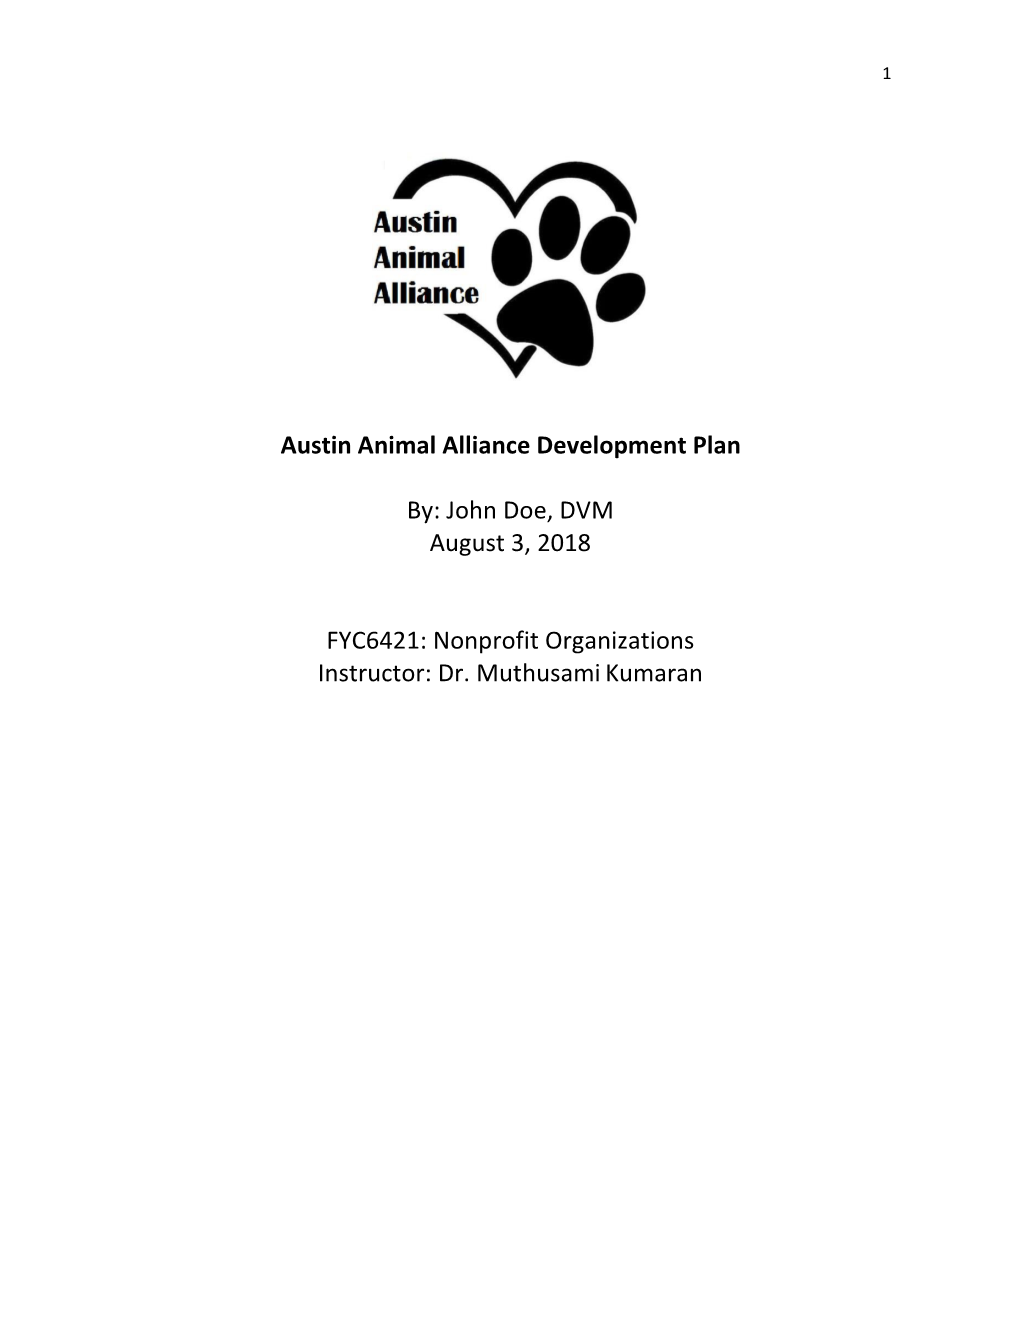 Austin Animal Alliance Development Plan By: John Doe, DVM August 3